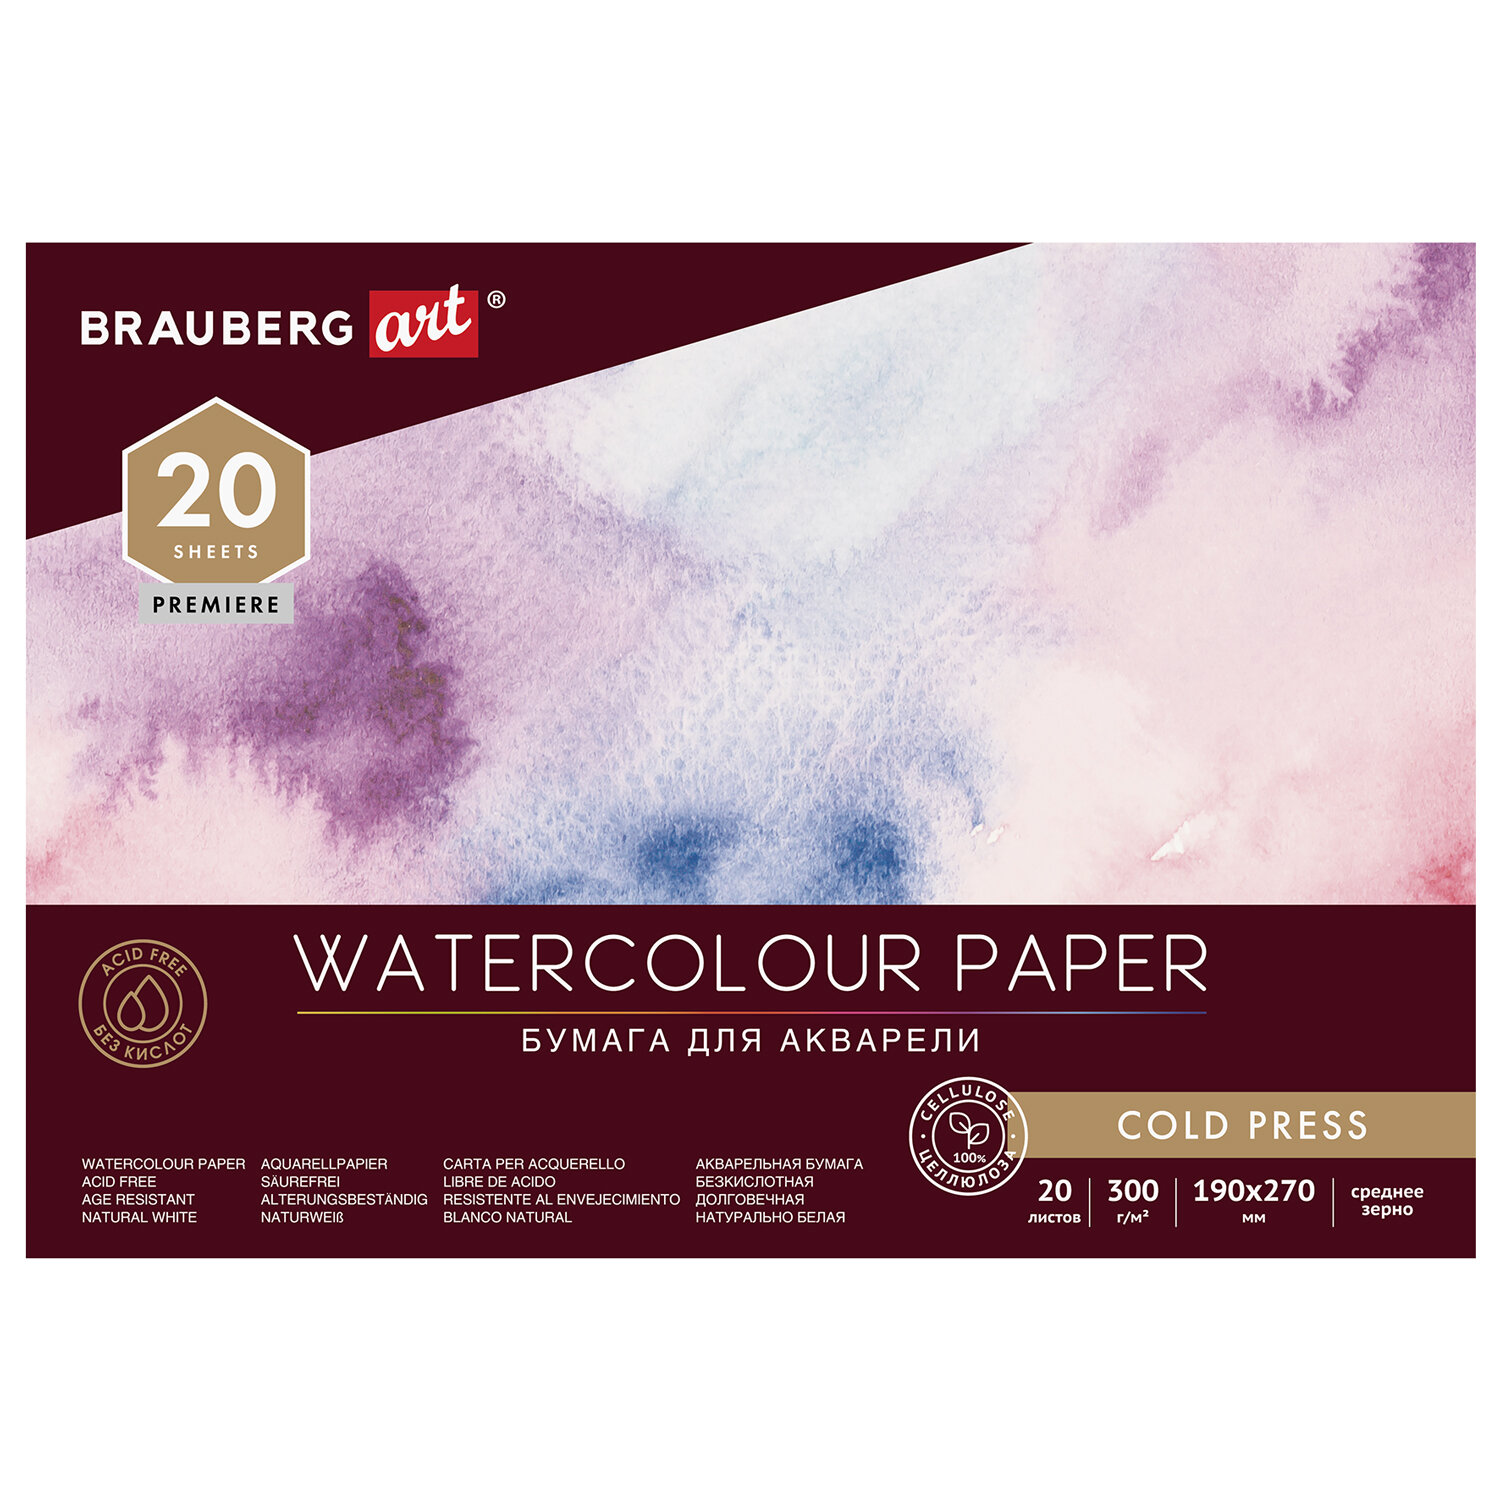 Brauberg Альбом для акварели, бумага 300 г/м2, 190х270 мм, среднее зерно, 20 листов, склейка, BRAUBERG ART PREMIERE, 113222